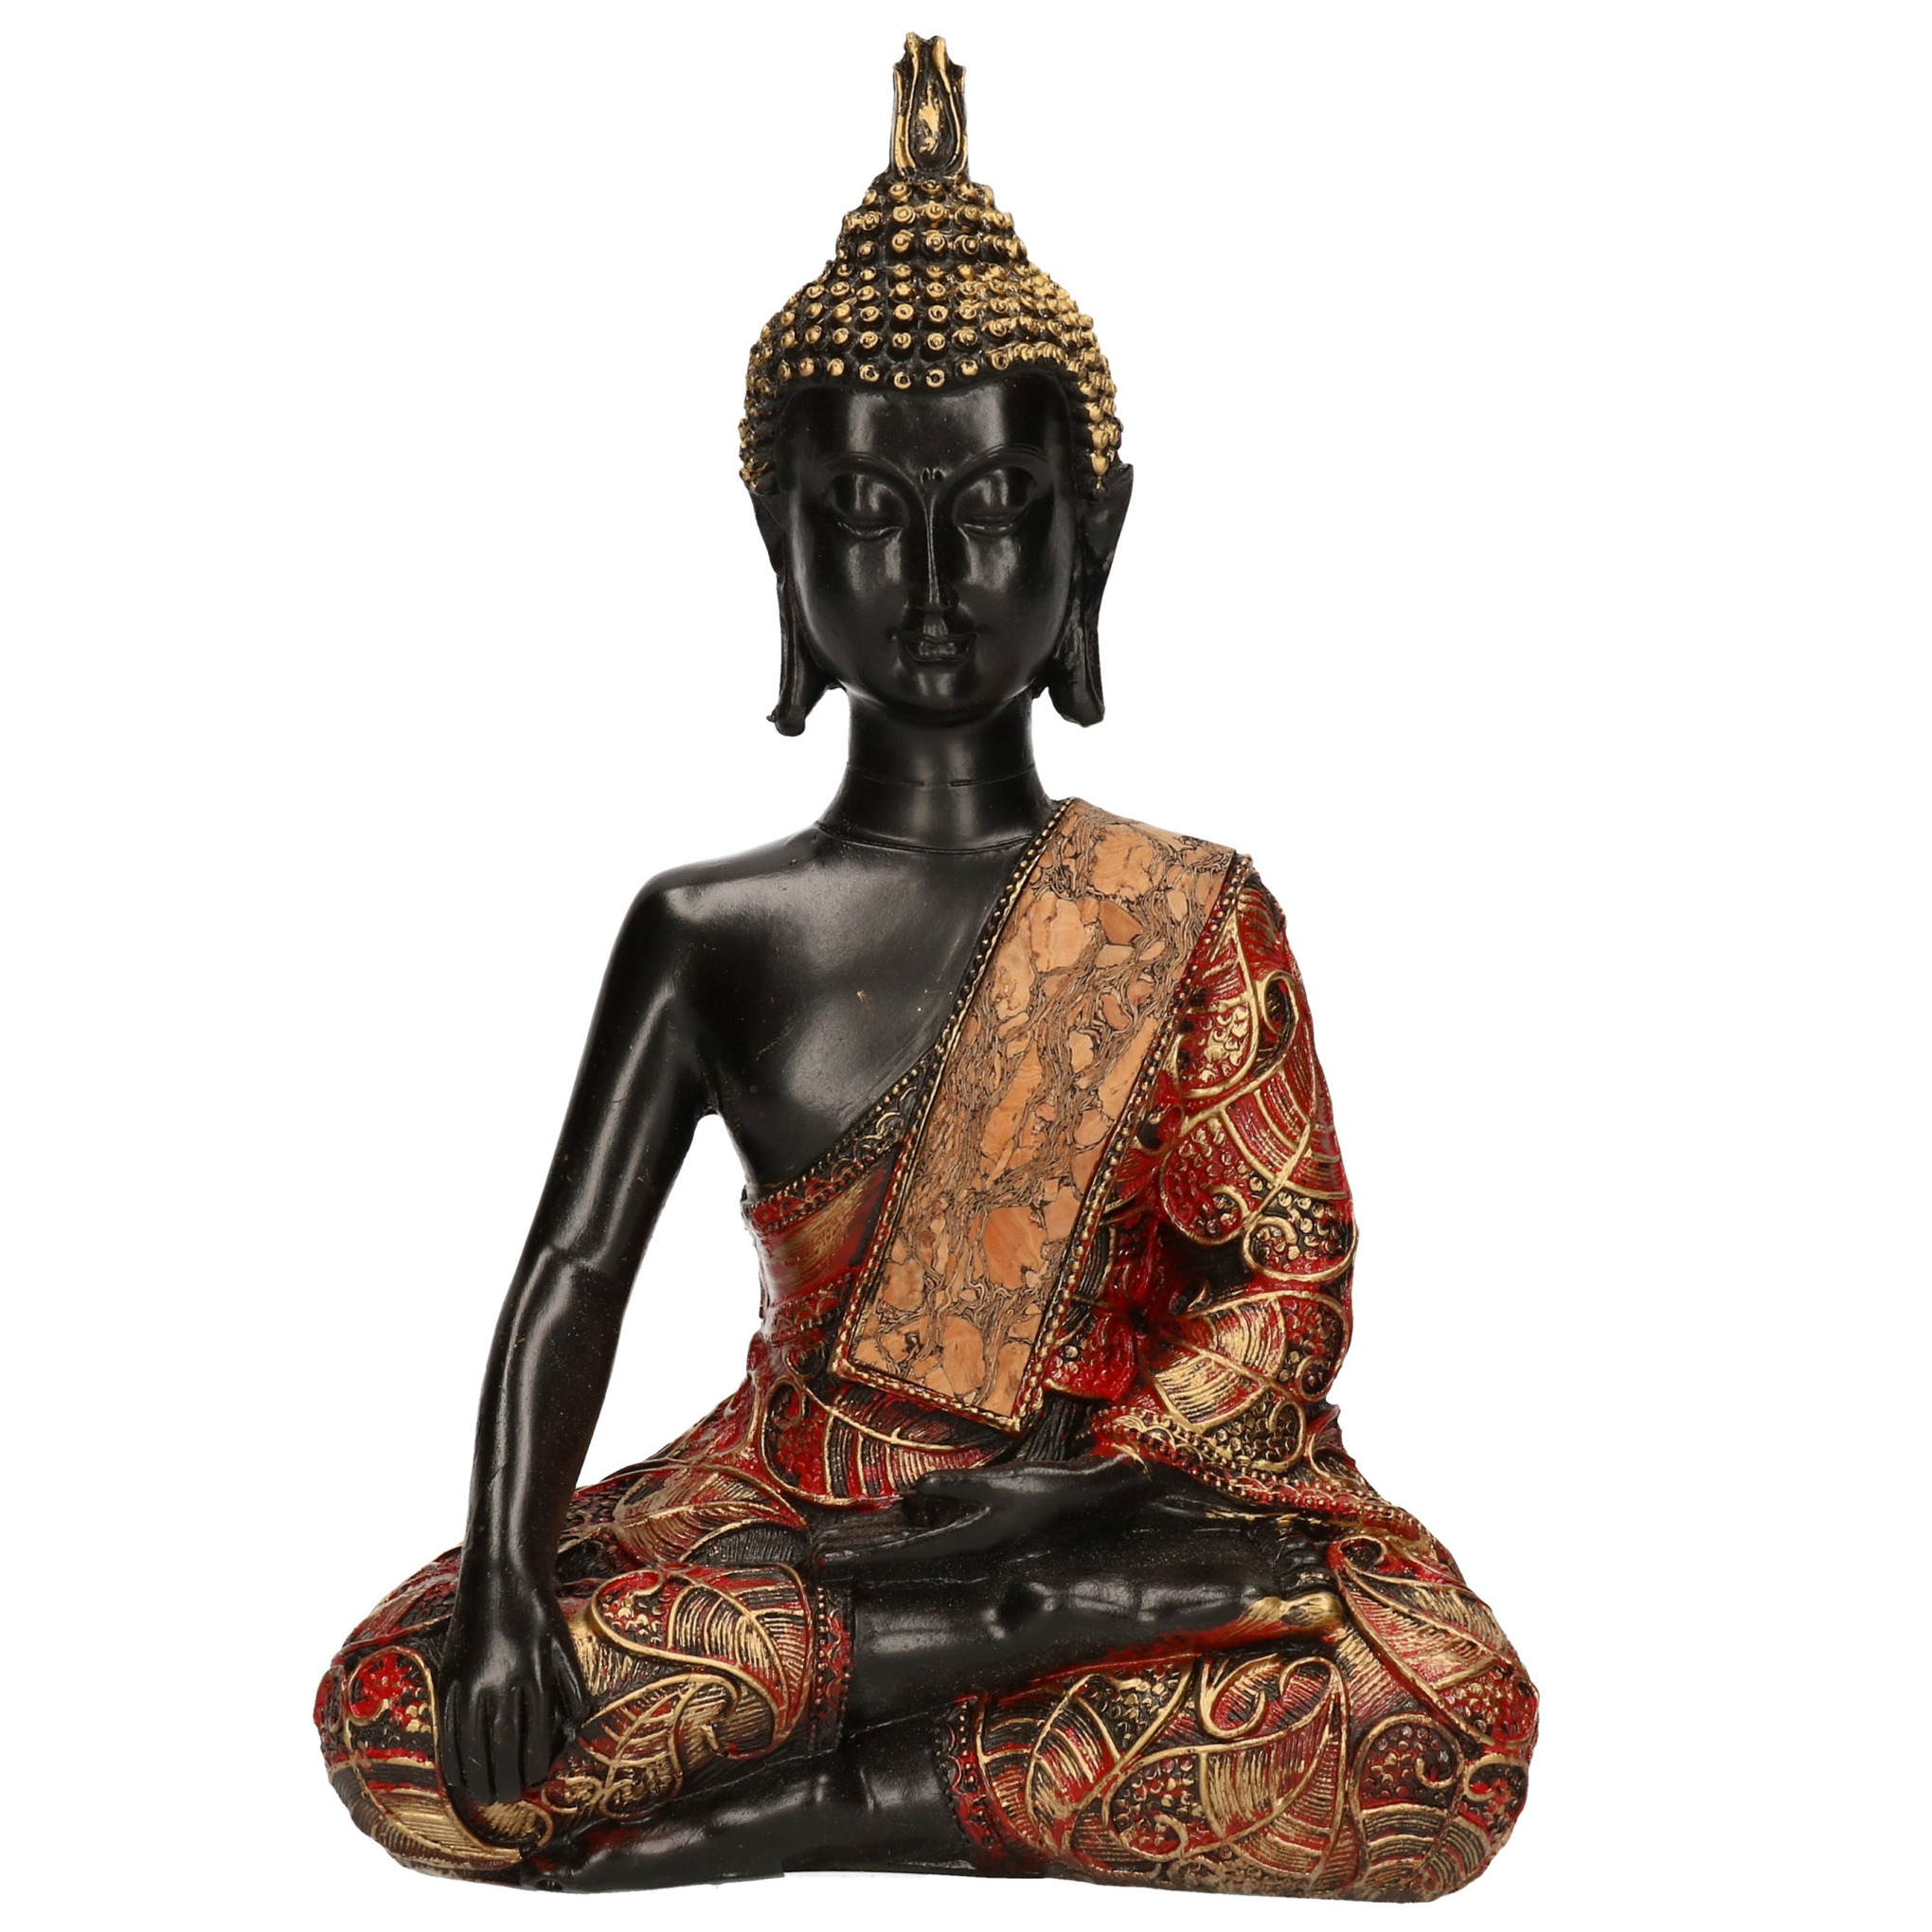 Decoratie boeddha beeld zwart-goud-rood 21 cm type 2